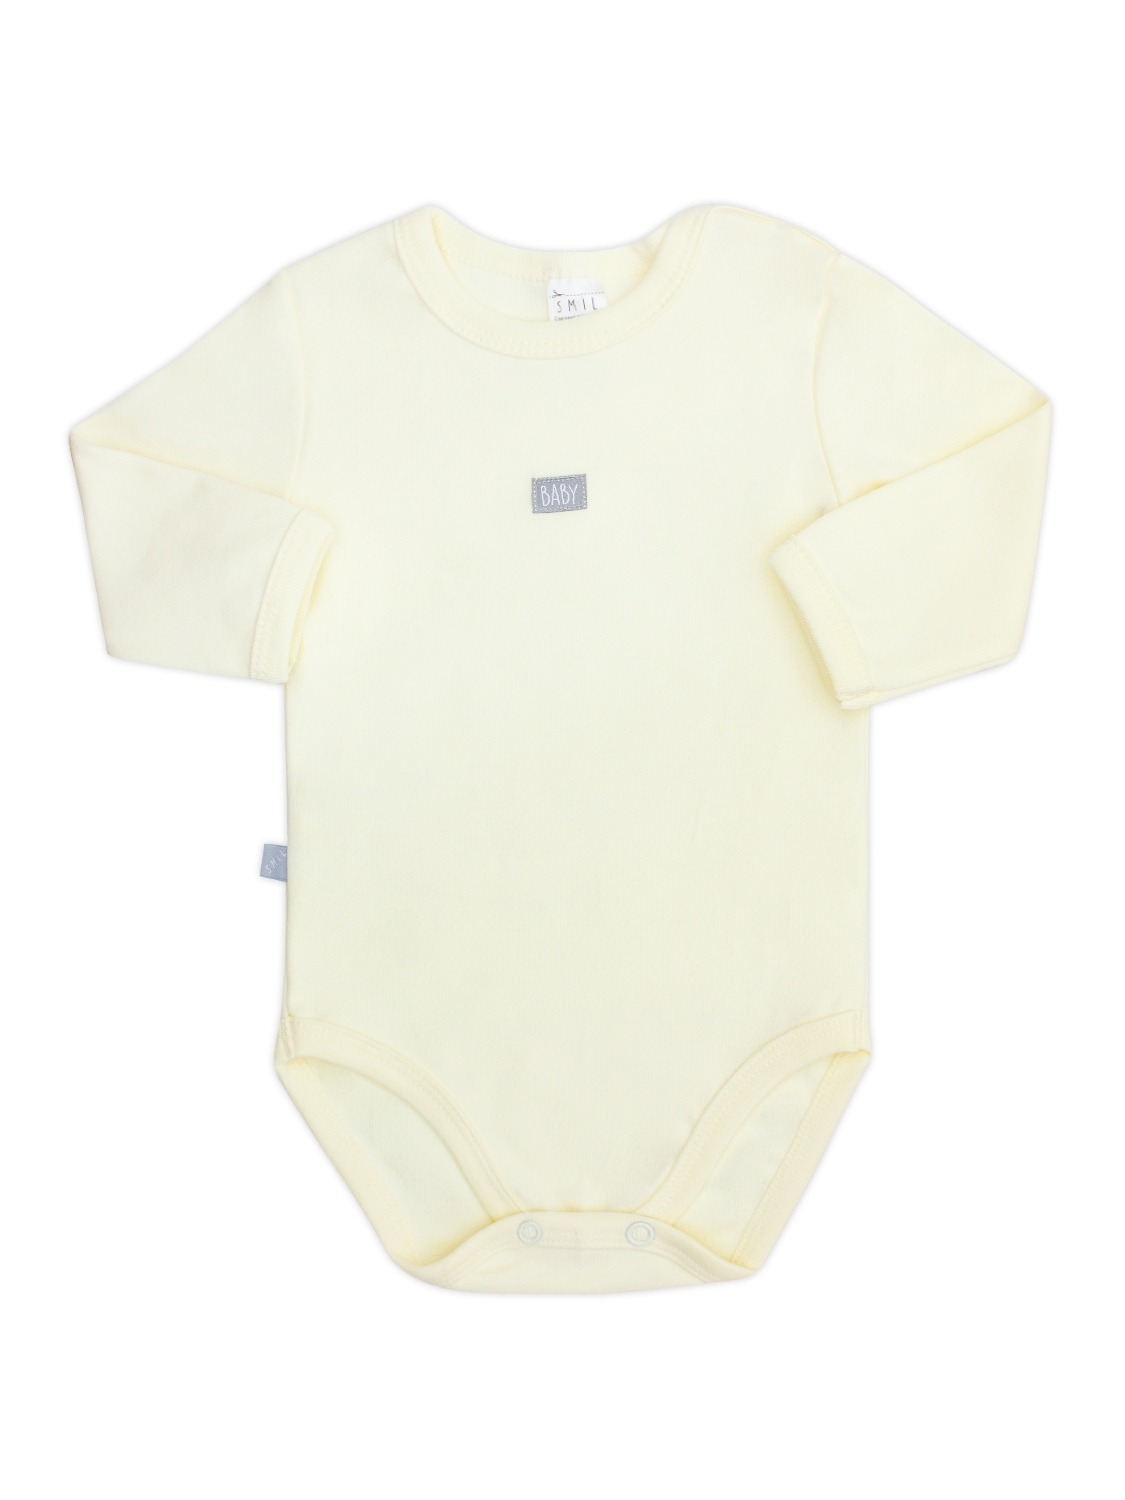 Боди-футболка детская, арт. 102451, возраст от 6 до 18 месяцев